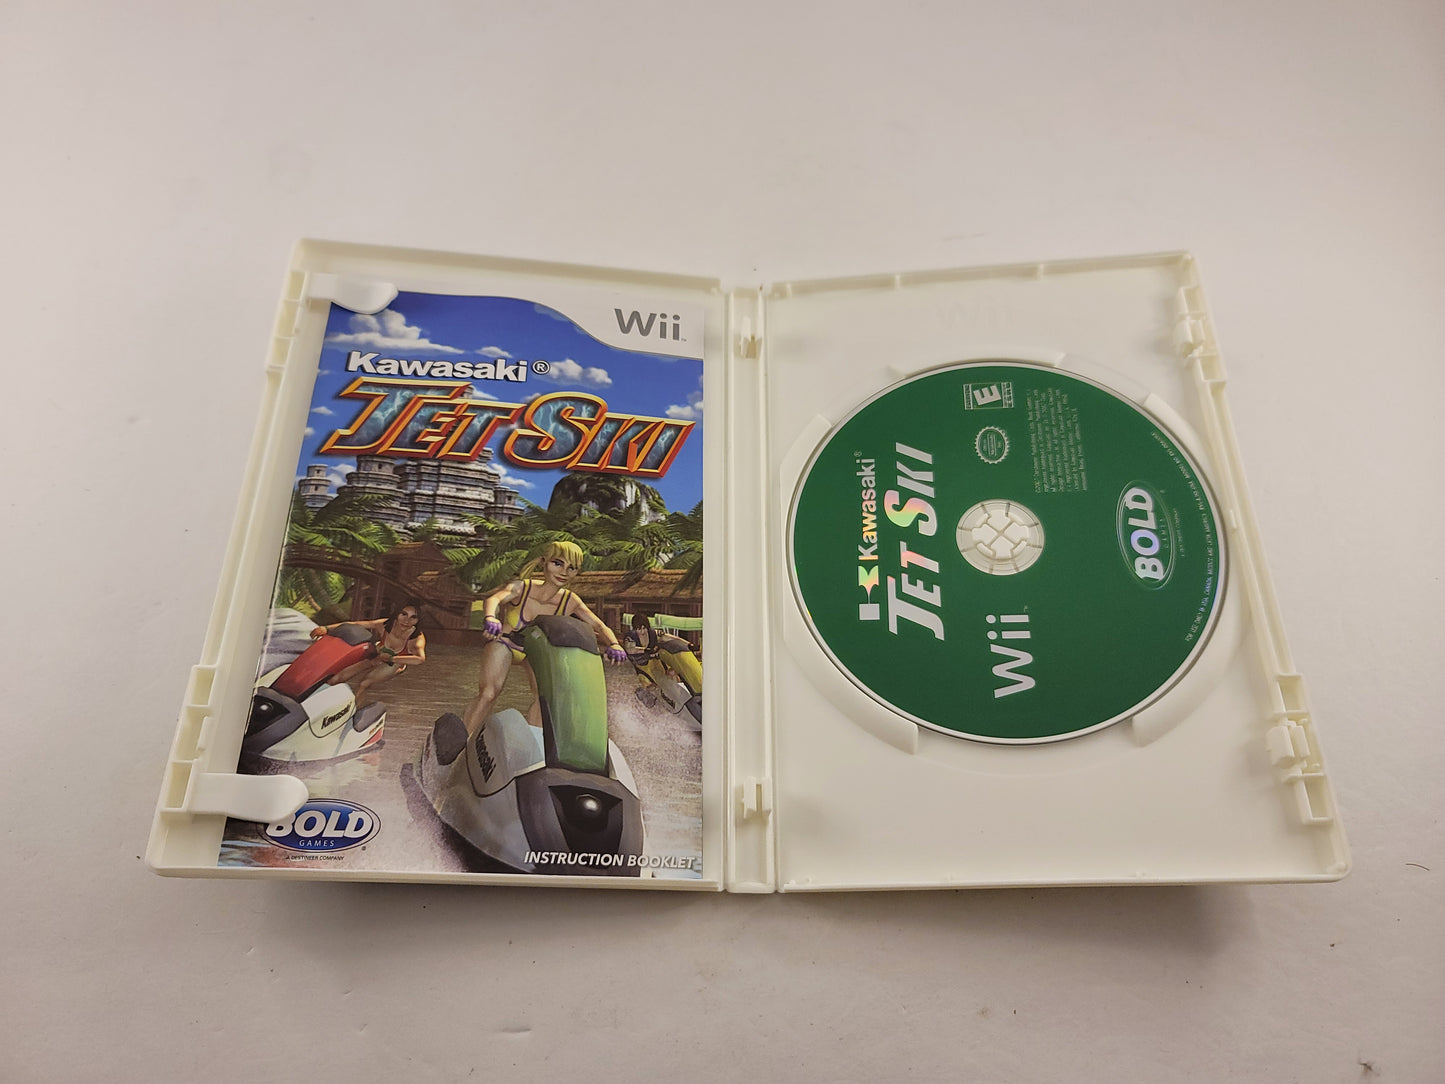 Kawasaki Jet Ski (Nintendo Wii, 2008)